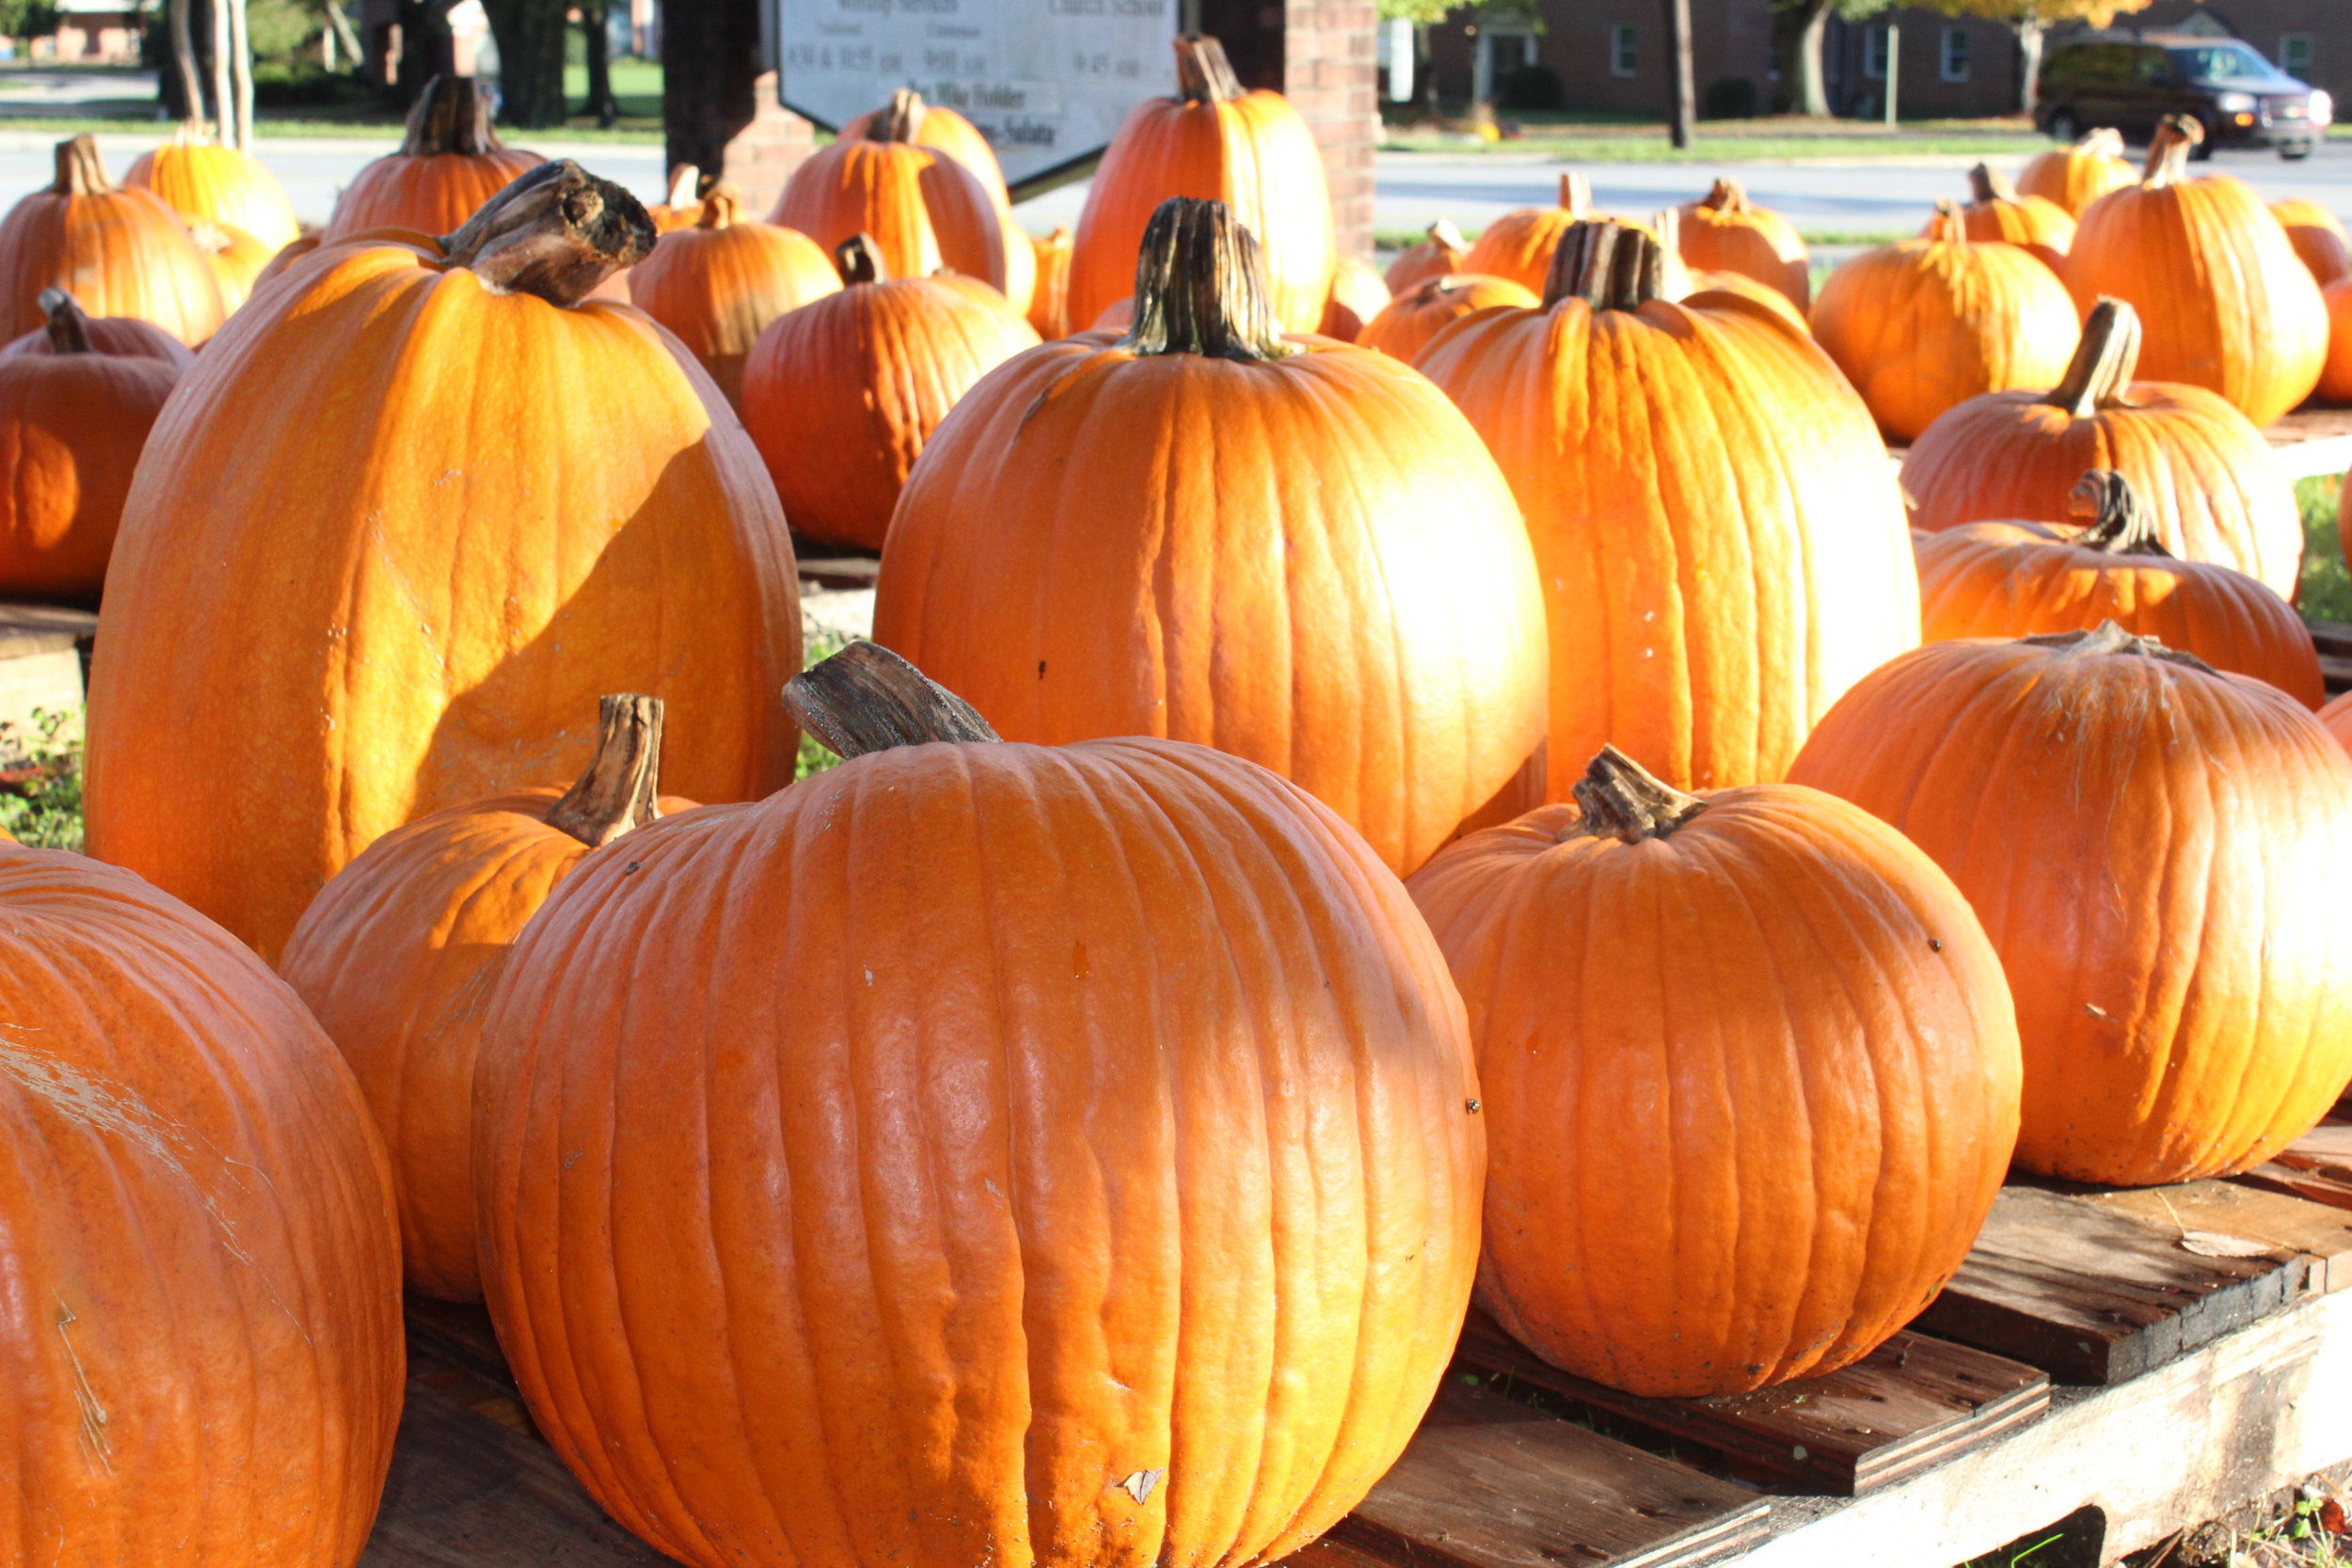 The tall 'Harvest Time Hybrid' pumpkins make good Jack-o-lanterns and last long past Halloween.